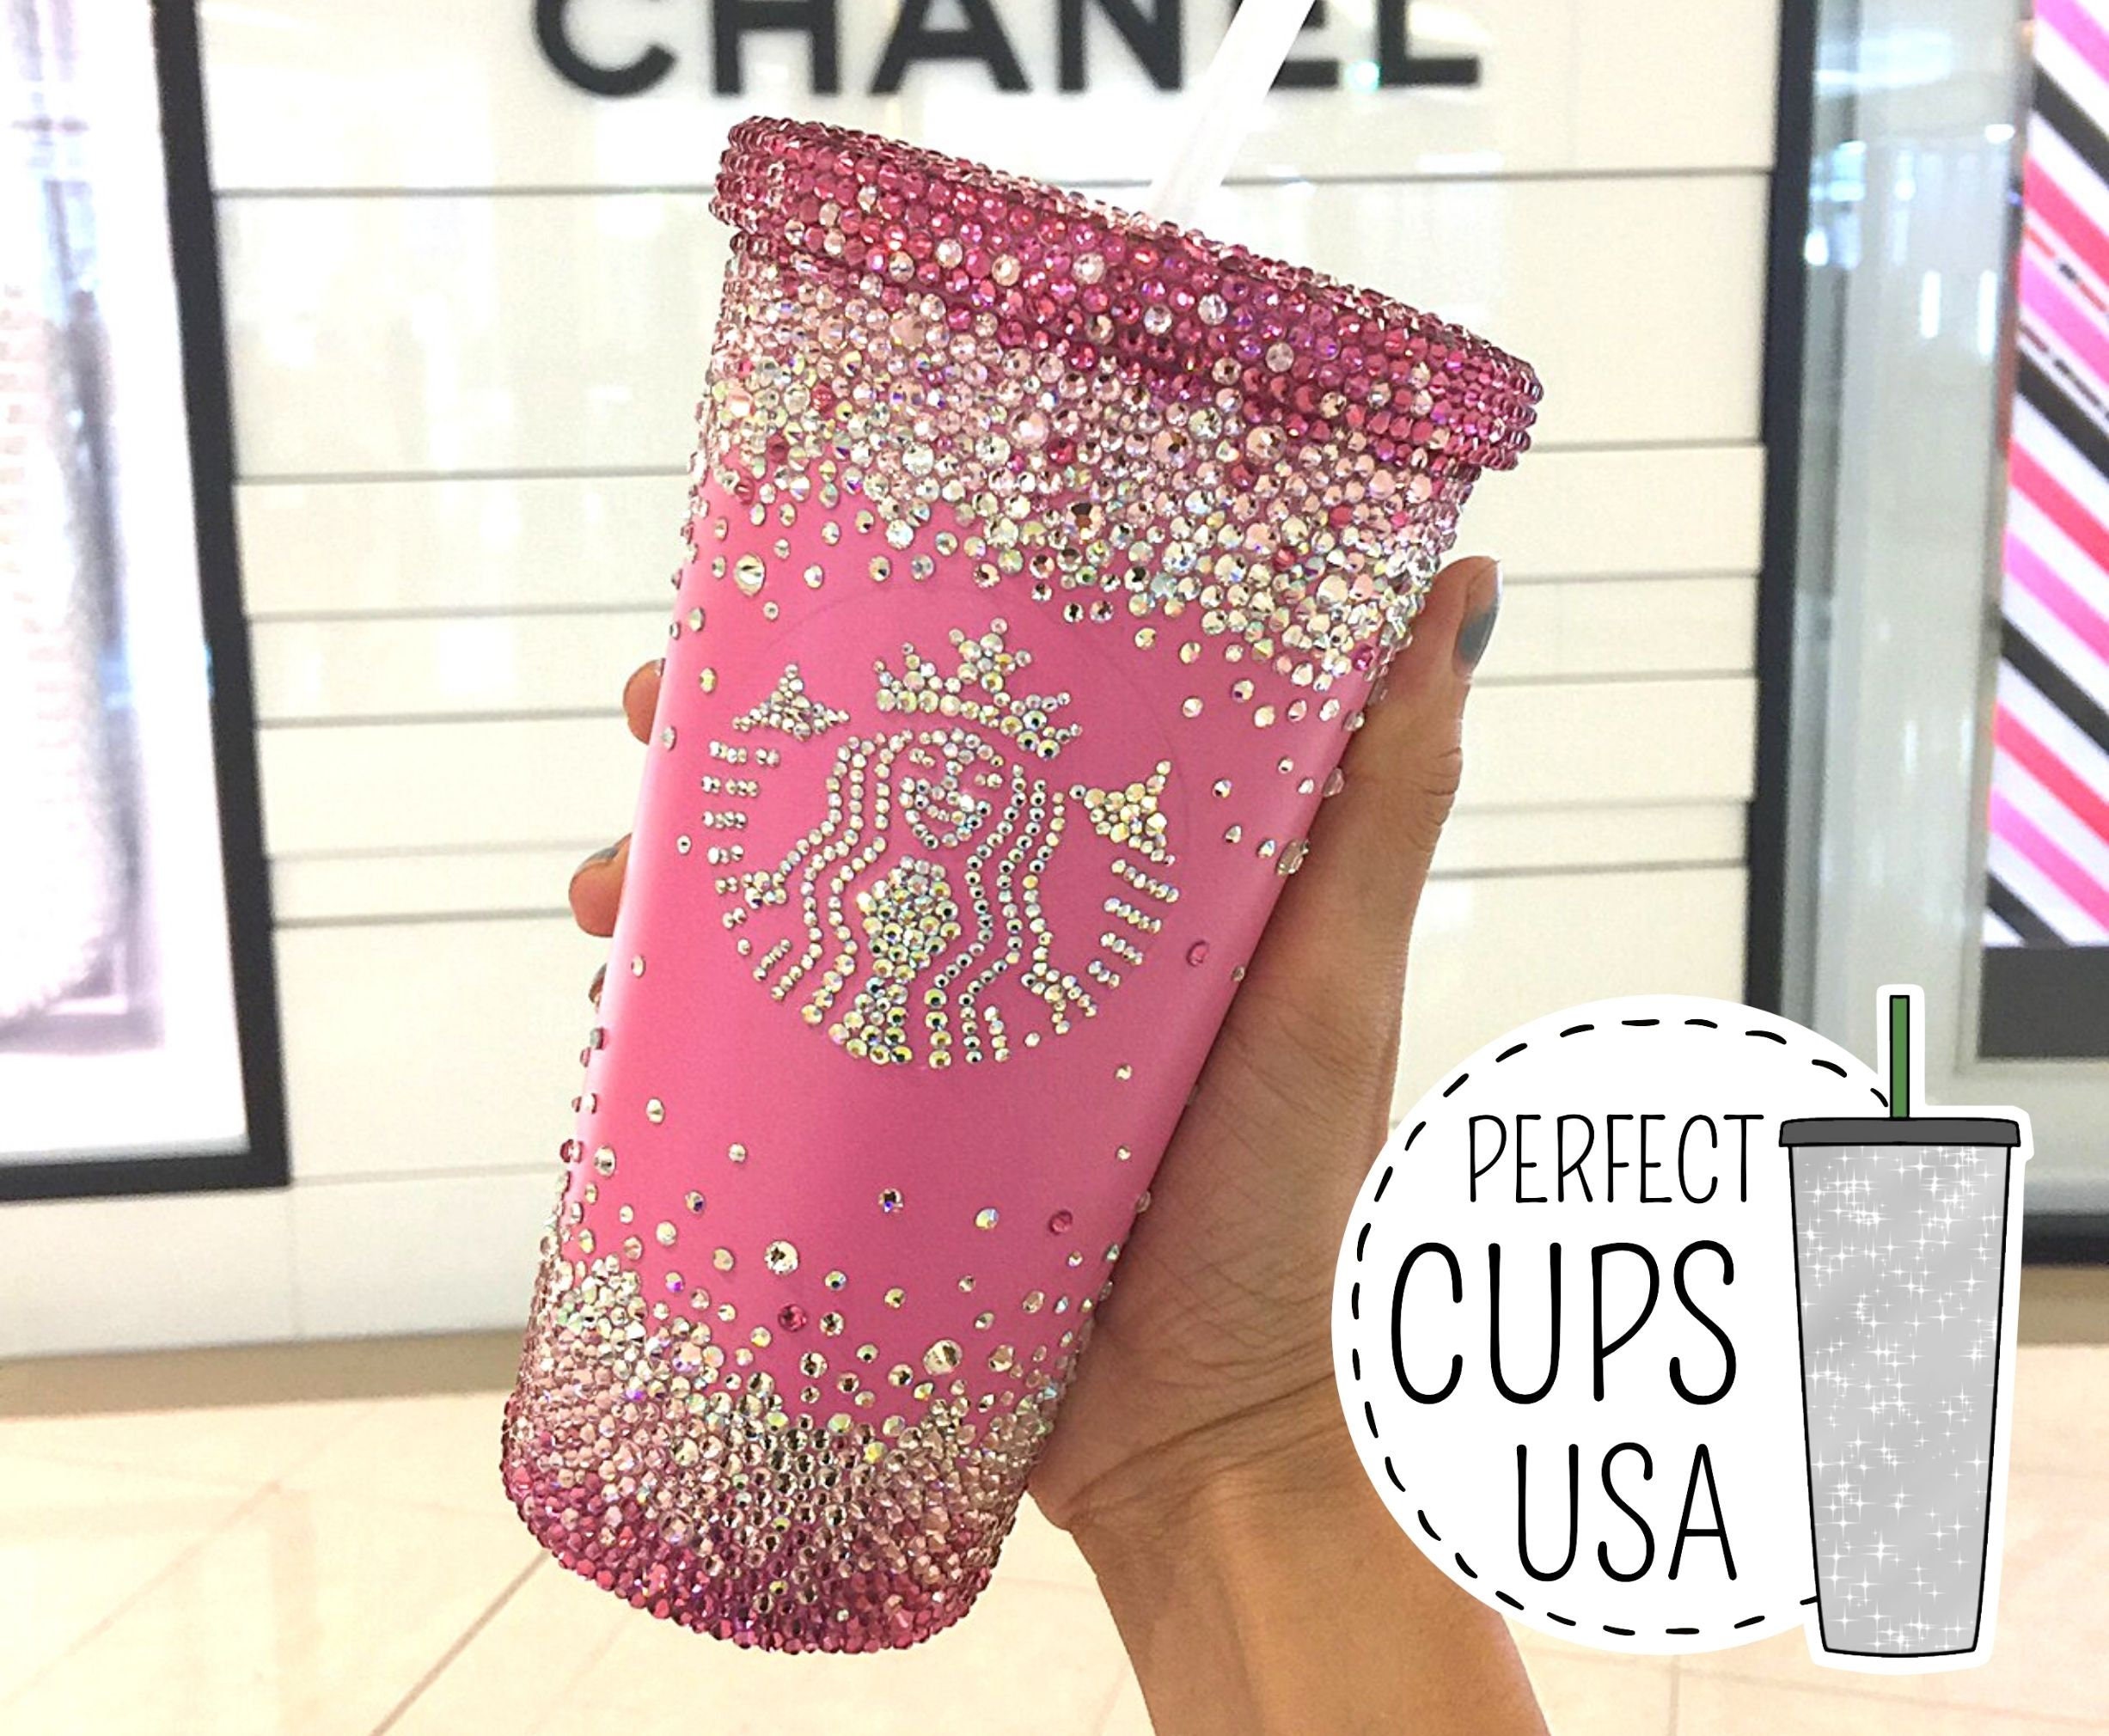 Stainless Starbucks Coffee Cup Tumbler w/ Swarovski Rose Gold